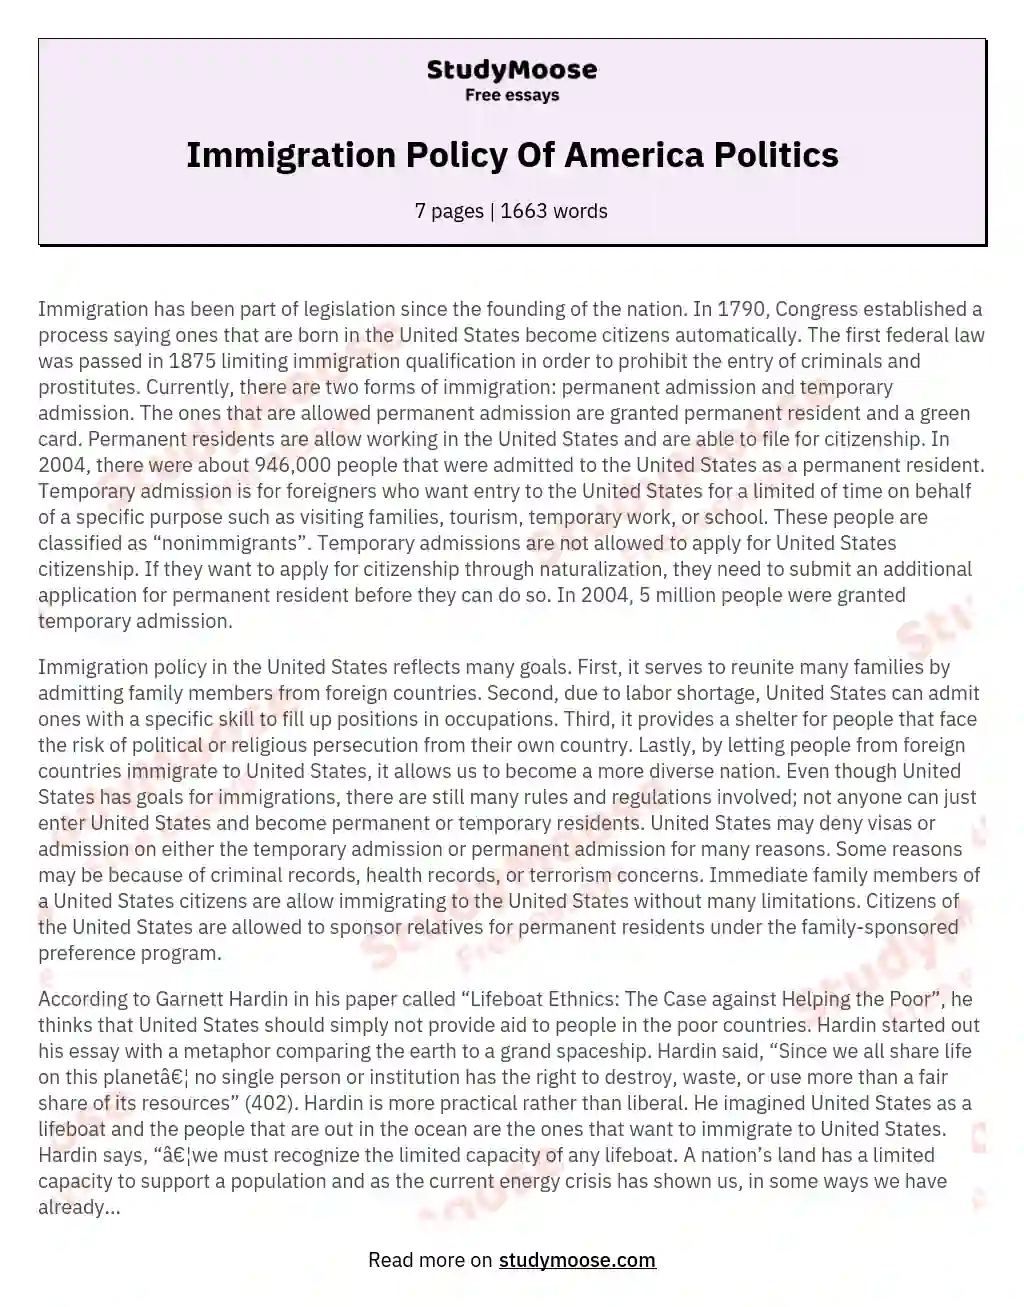 Immigration Policy Of America Politics essay